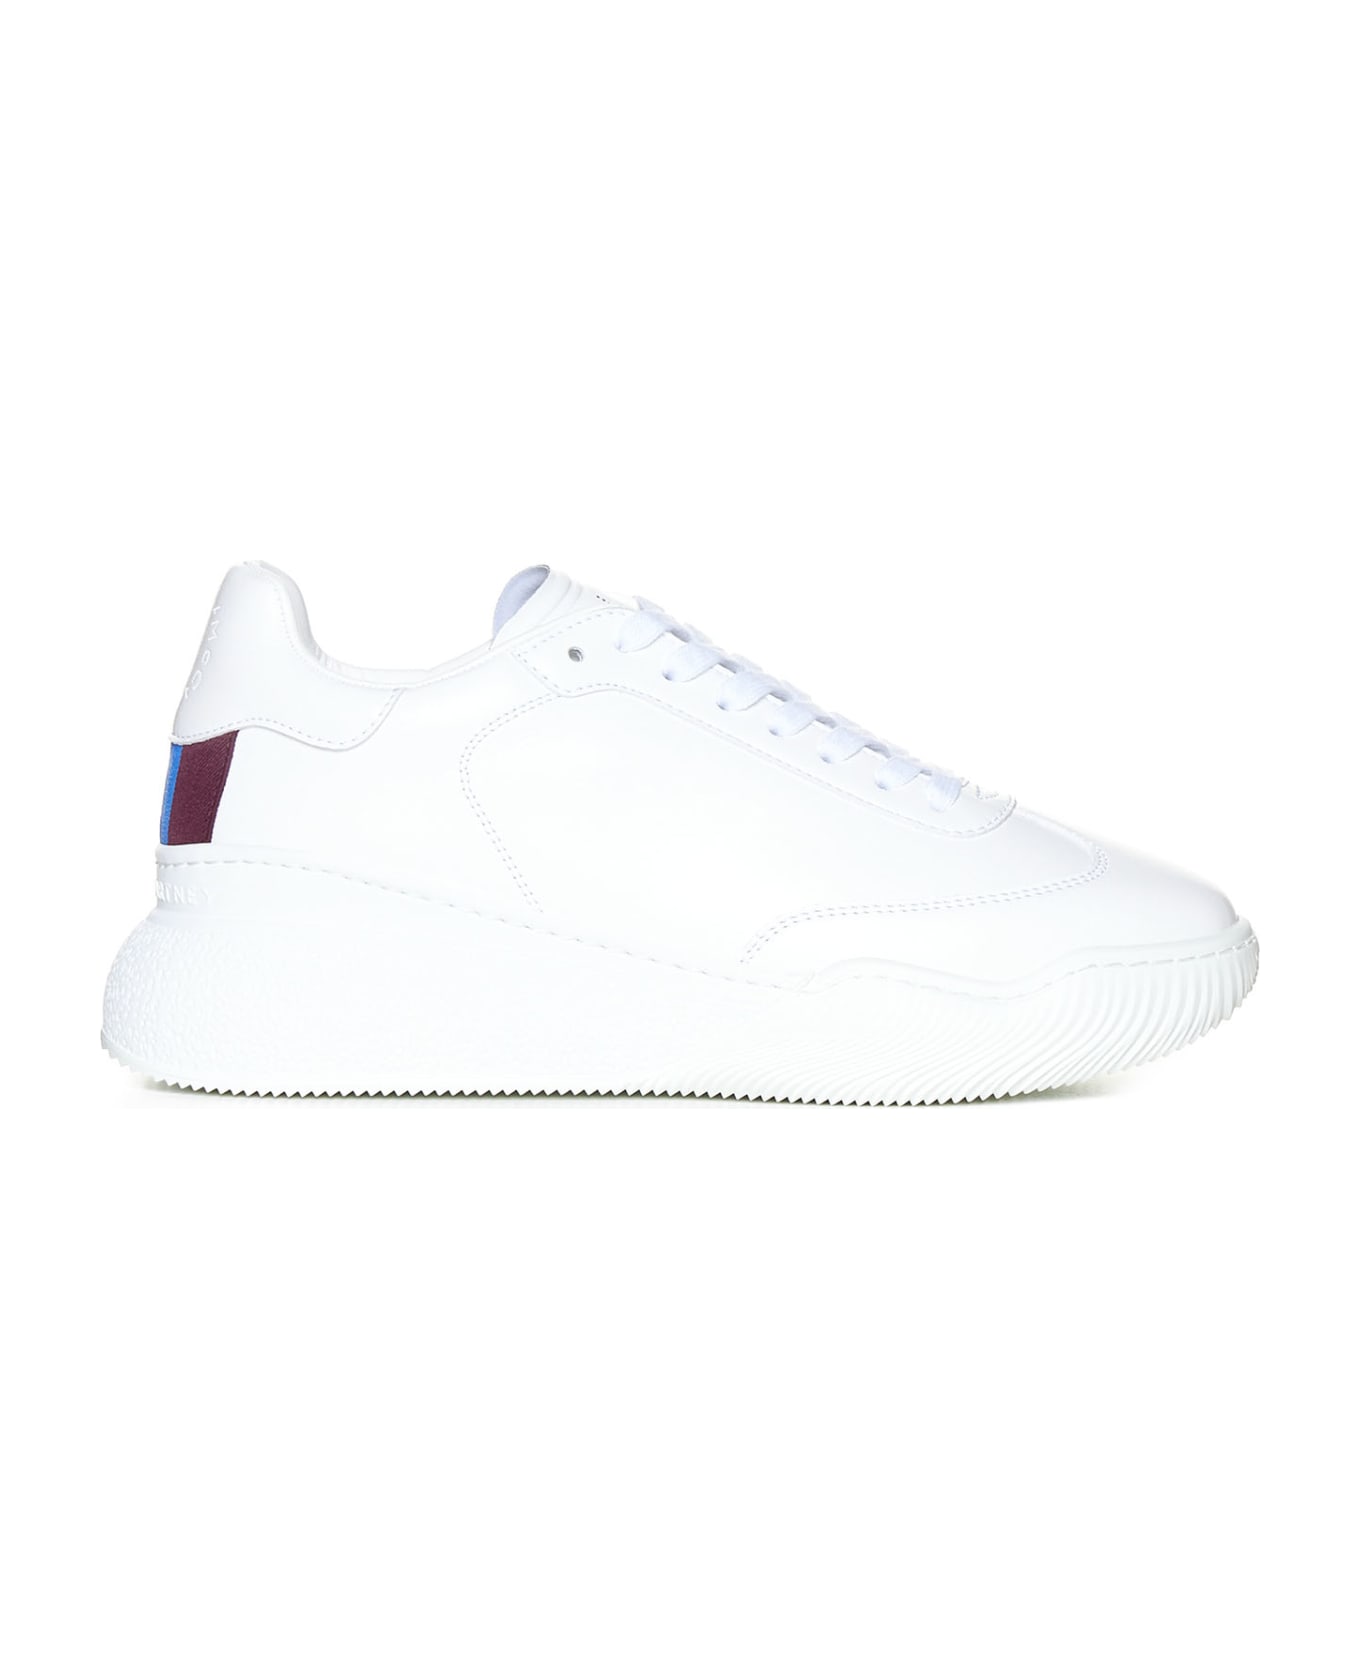 Stella McCartney Leather Sneakers - White